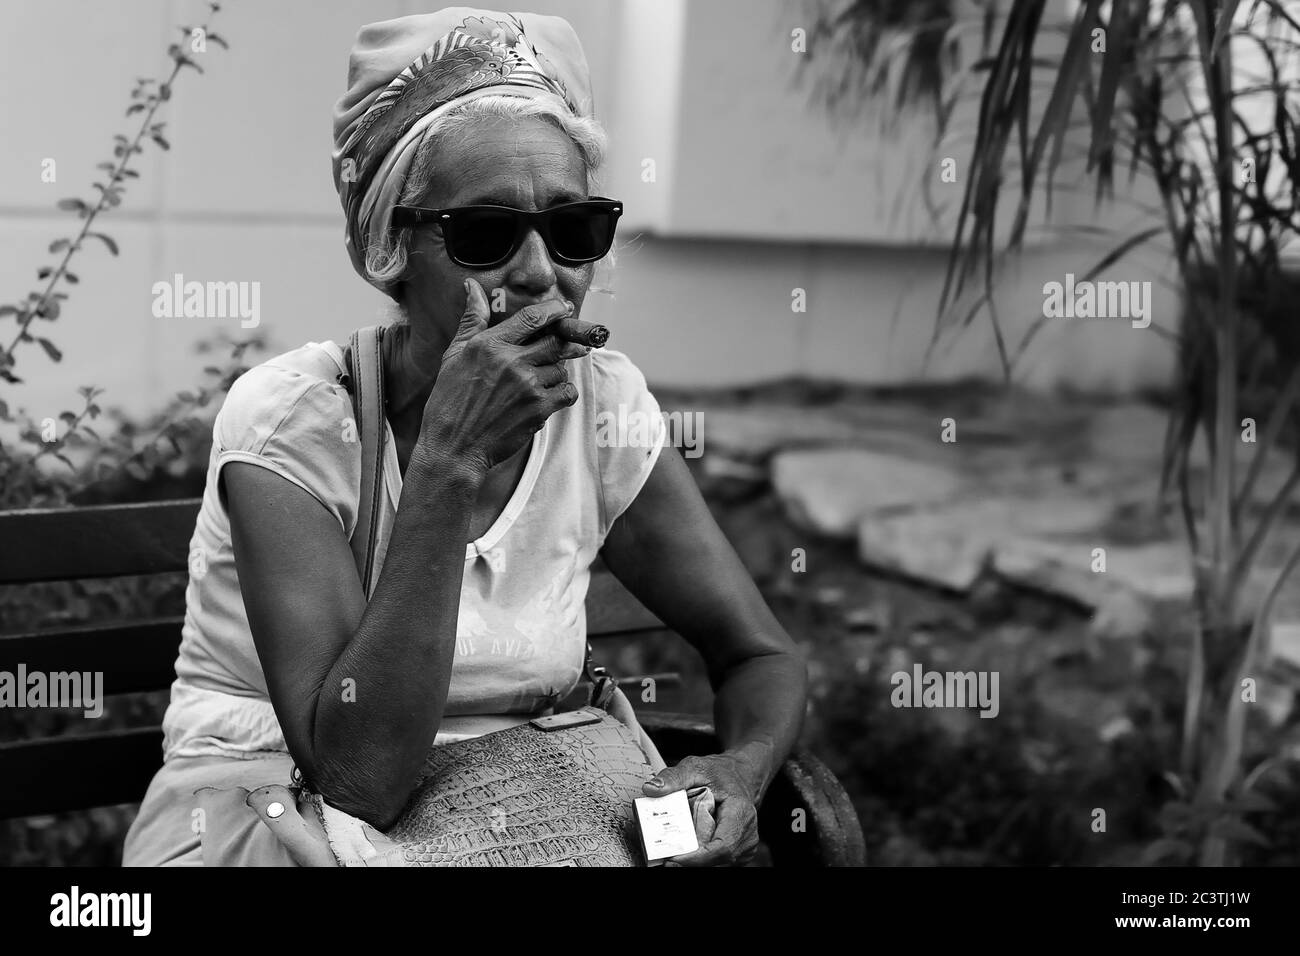 SANTIAGO de CUBA, KUBA - 29. NOVEMBER: Der Kubaner raucht am 29. November 2016 in Santiago de Cuba die Zigarre Stockfoto